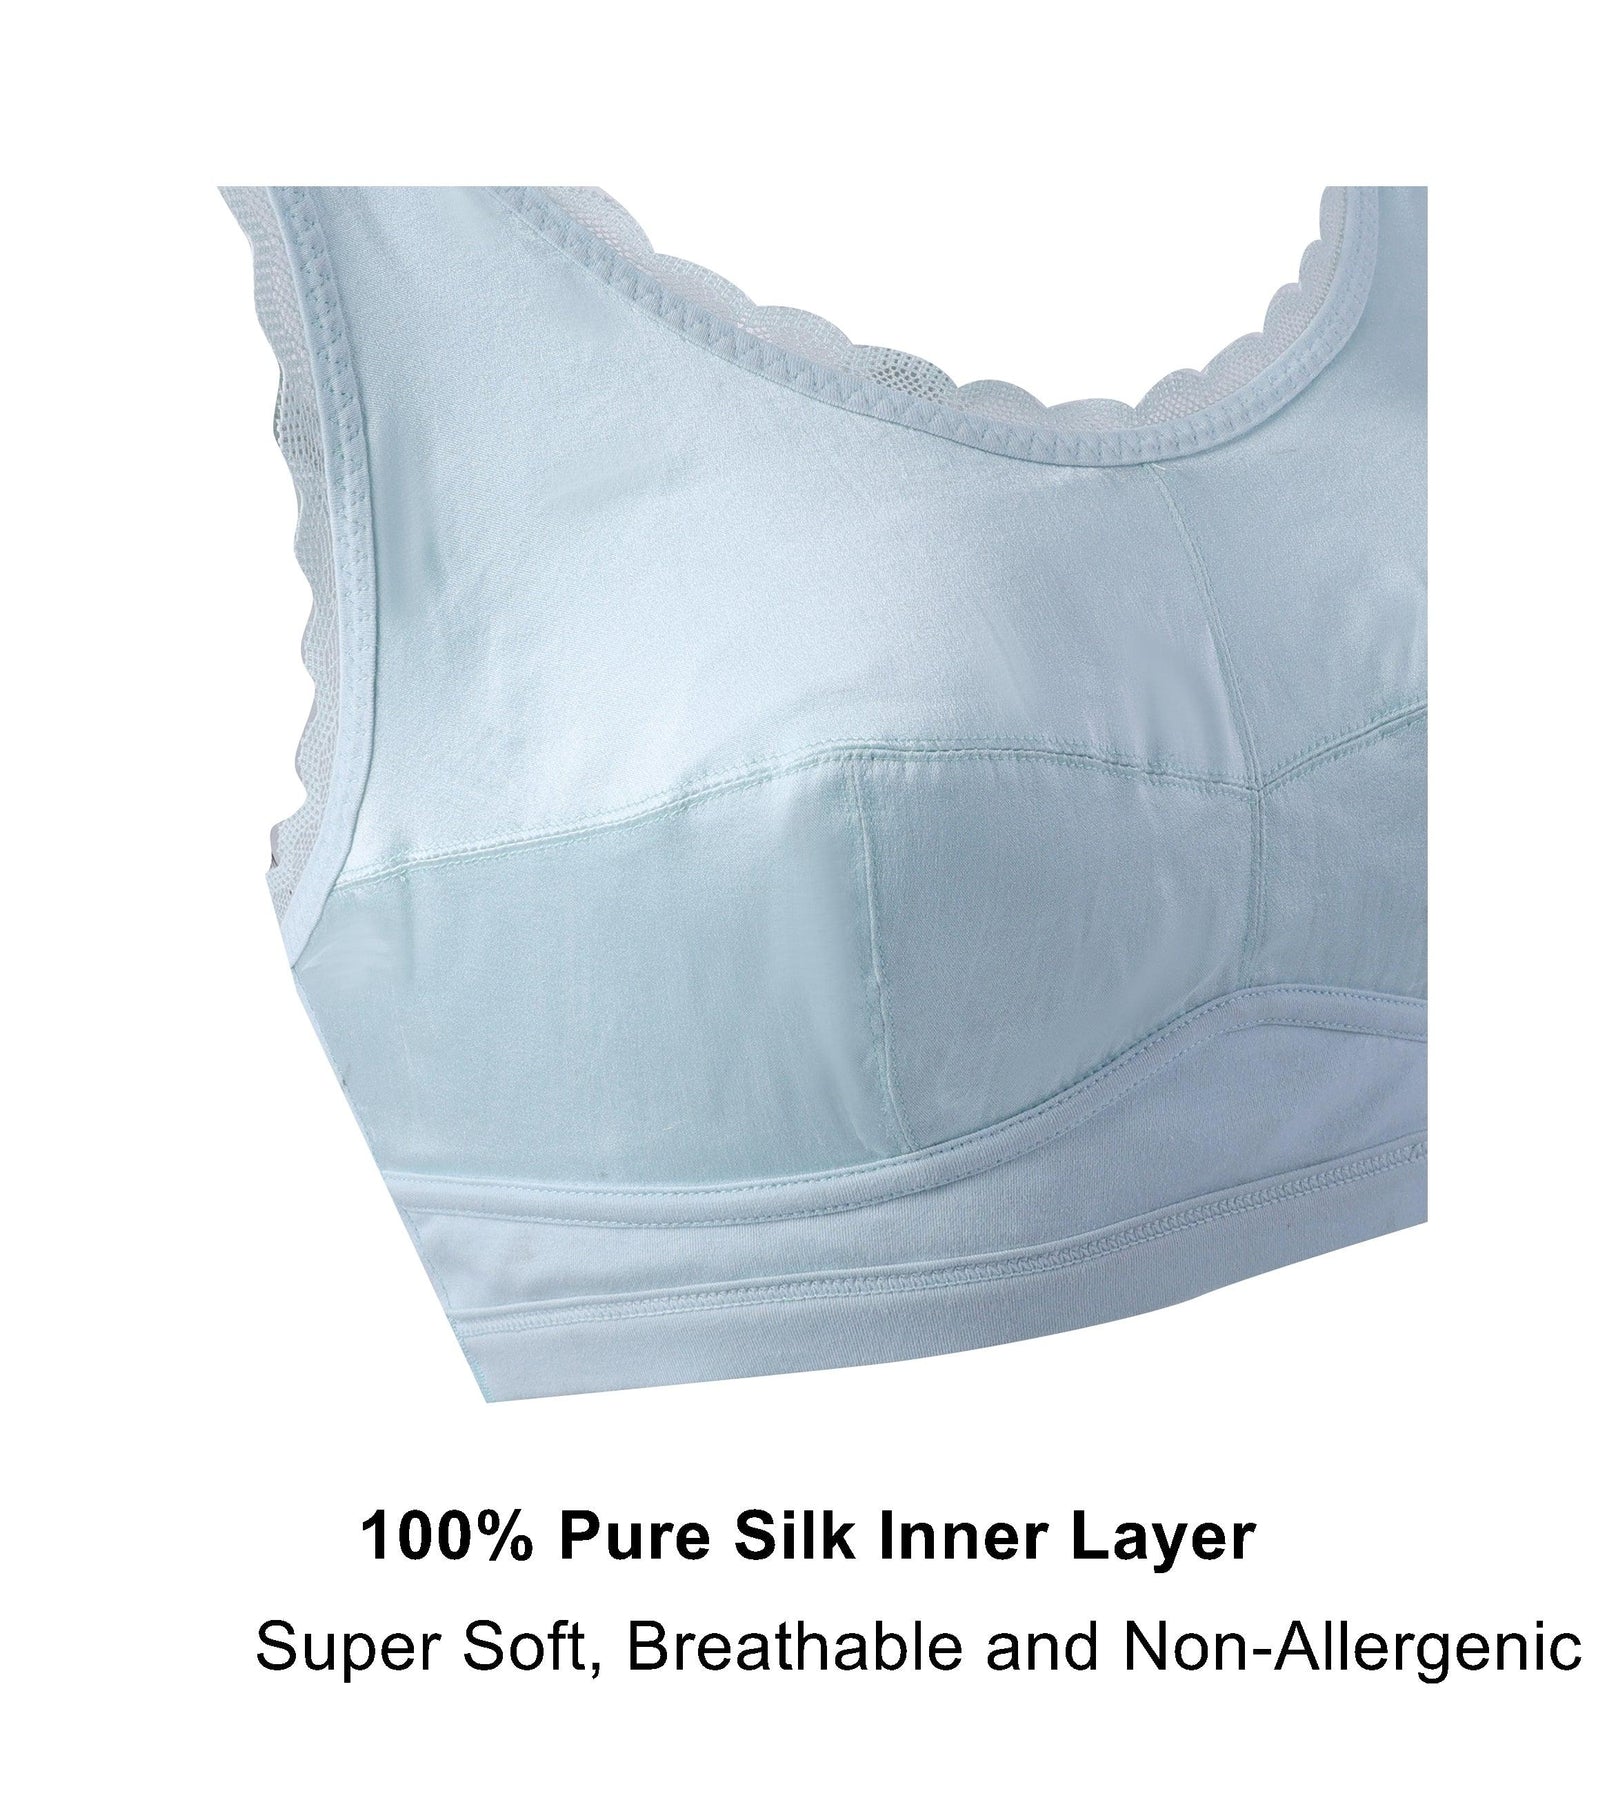 100% Silk Free Bra, Assemble No Plug, Comfortable Breathable